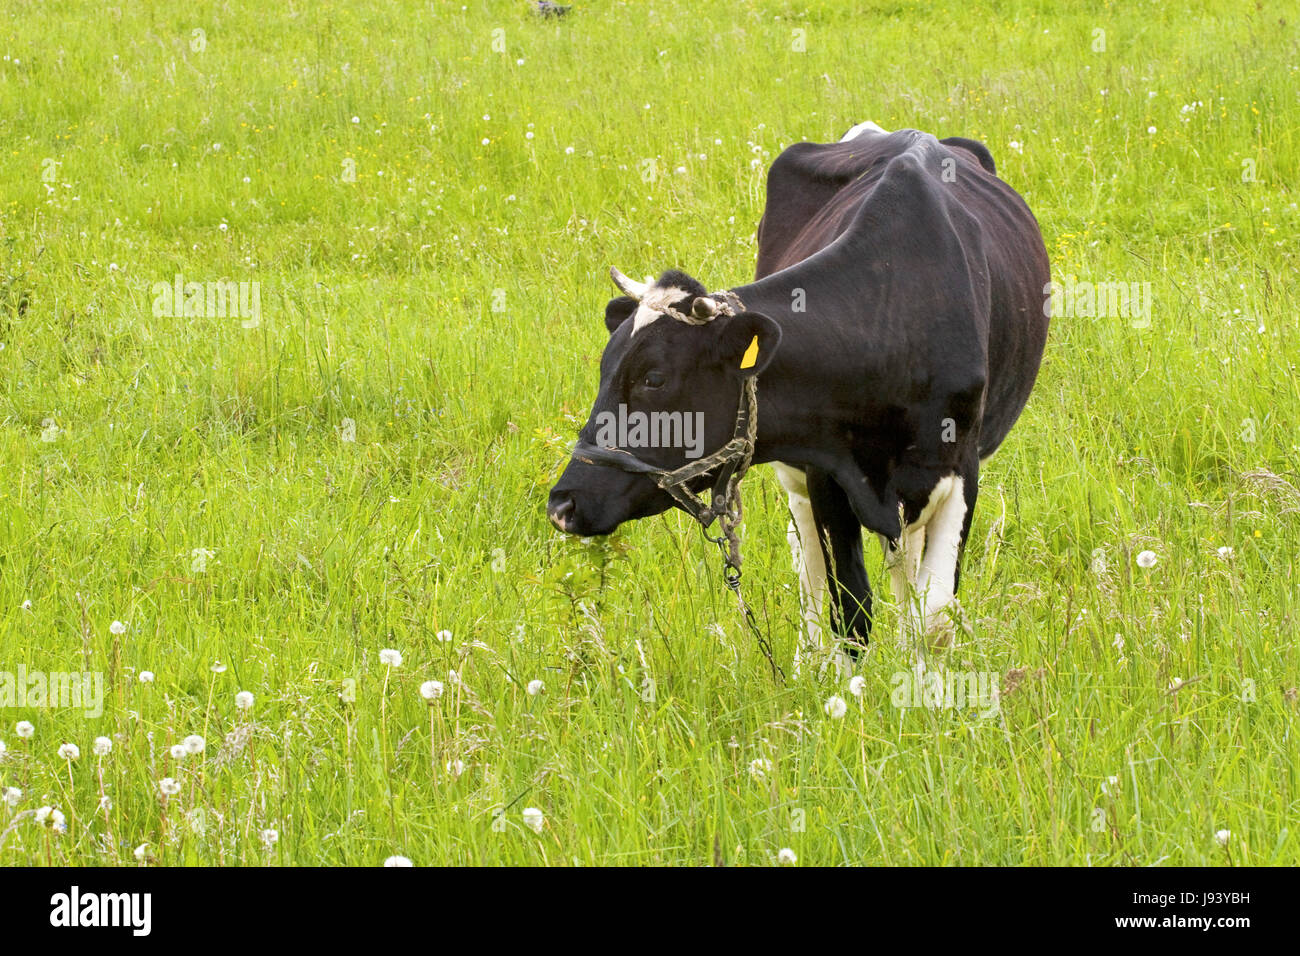 animal, mammal, agriculture, farming, cow, farmland, rural, peasant, nature, Stock Photo